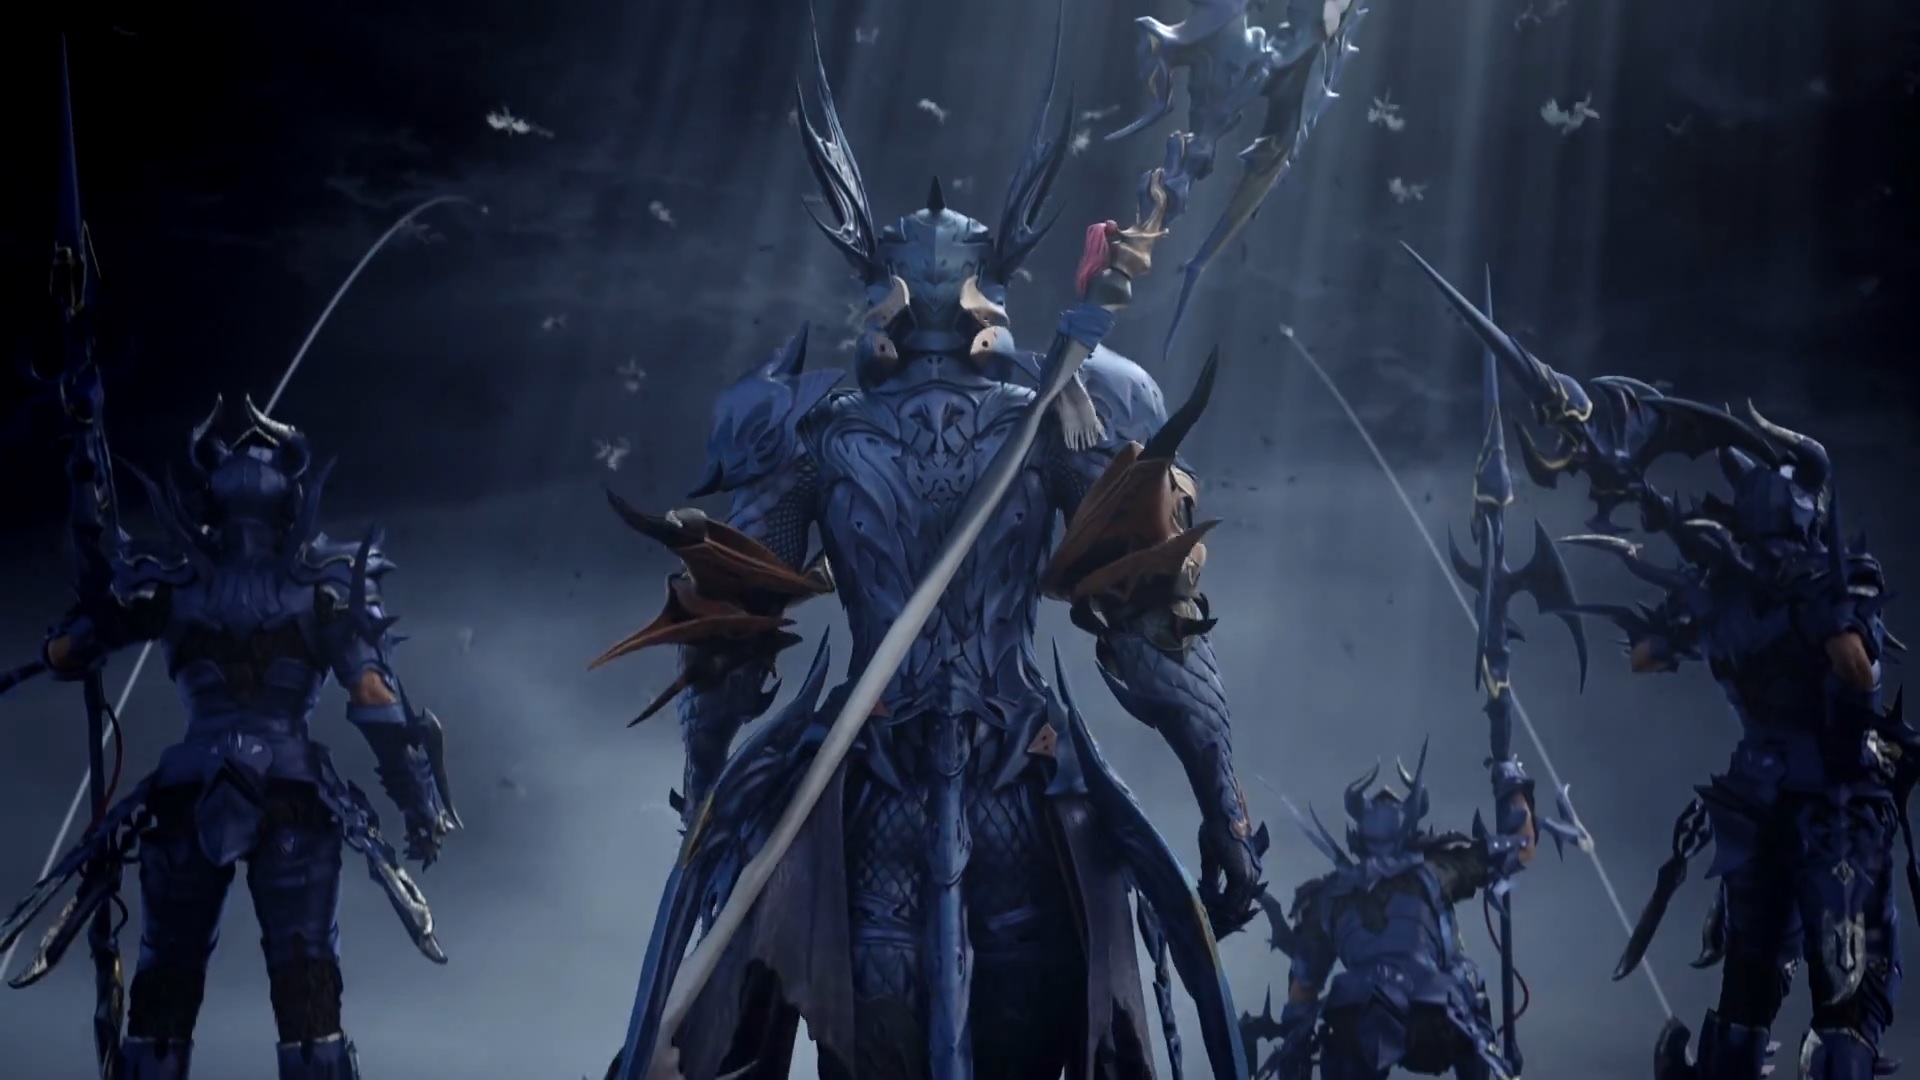 For Final Fantasy Xiv Heavensward Expansion Lightning Gaming News